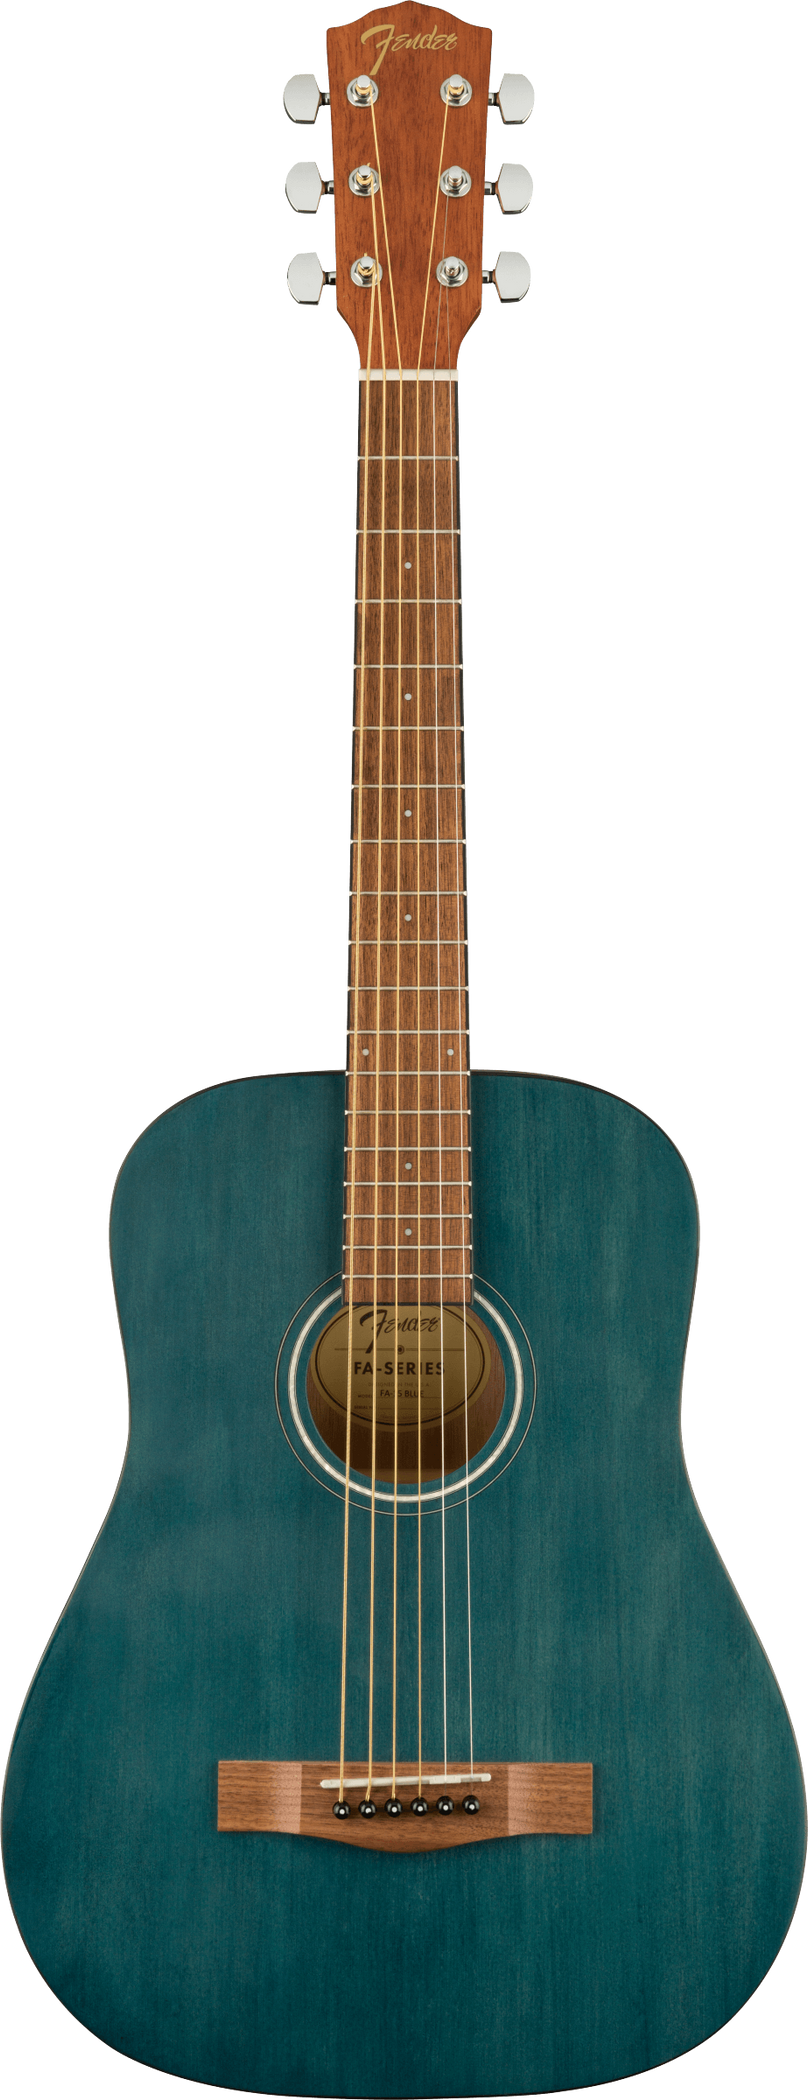 Acoustic Blue Guitar Background PNG Image